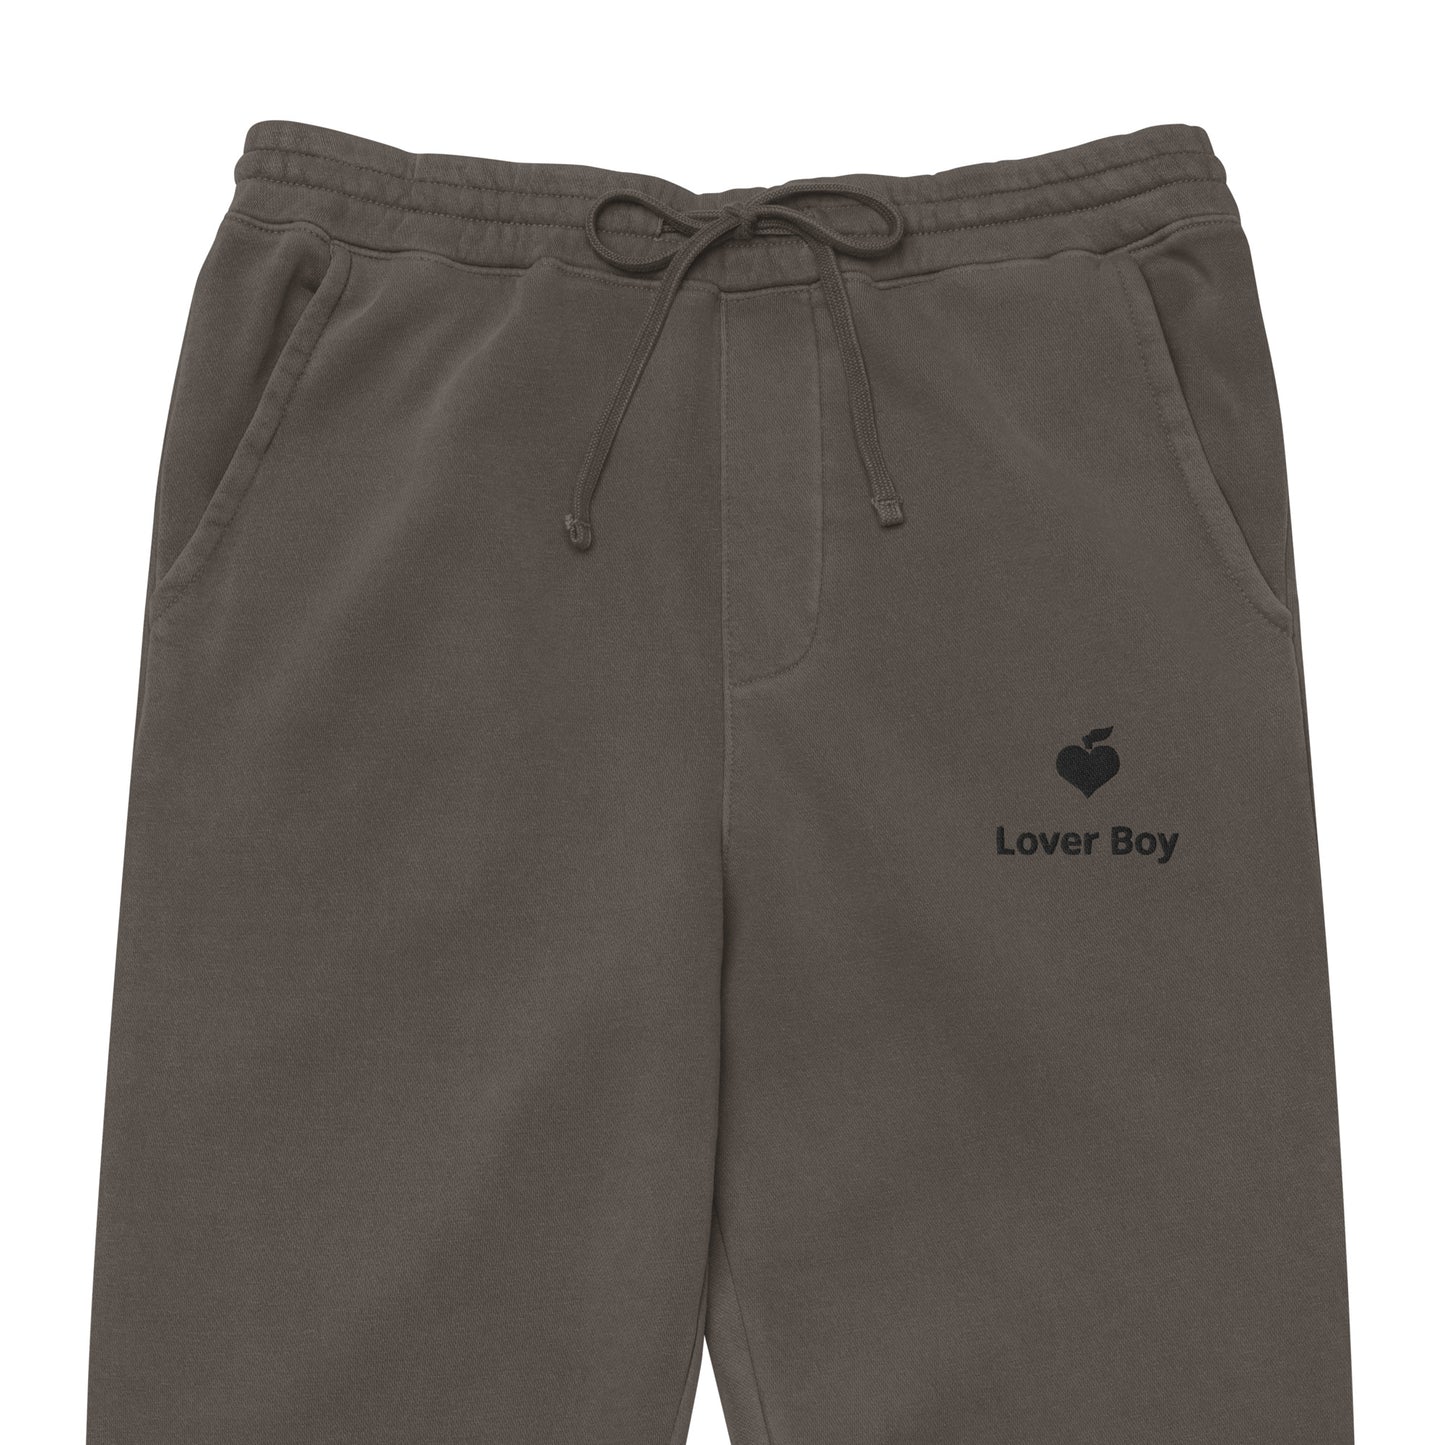 Lover Boy - Unisex pigment-dyed sweatpants